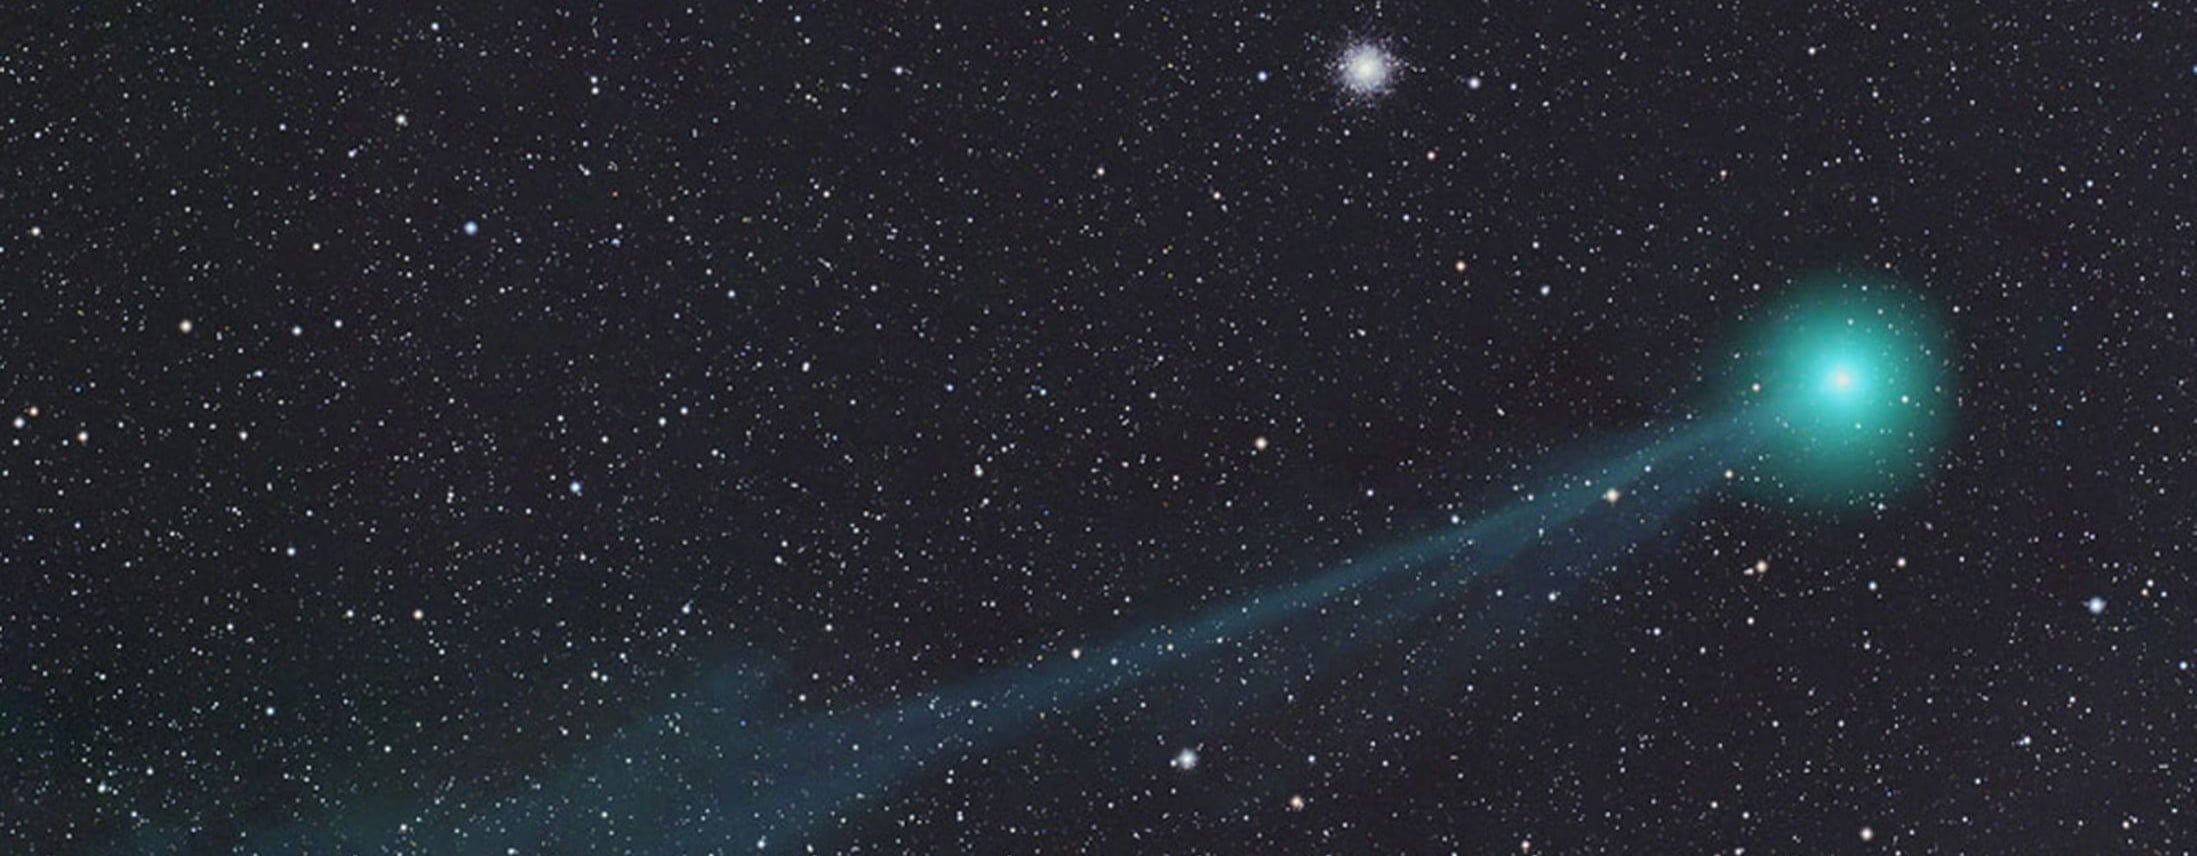 Comet Lovejoy Has Become Visible To The Unaided Eye E1422302737496 مجلة نقطة العلمية